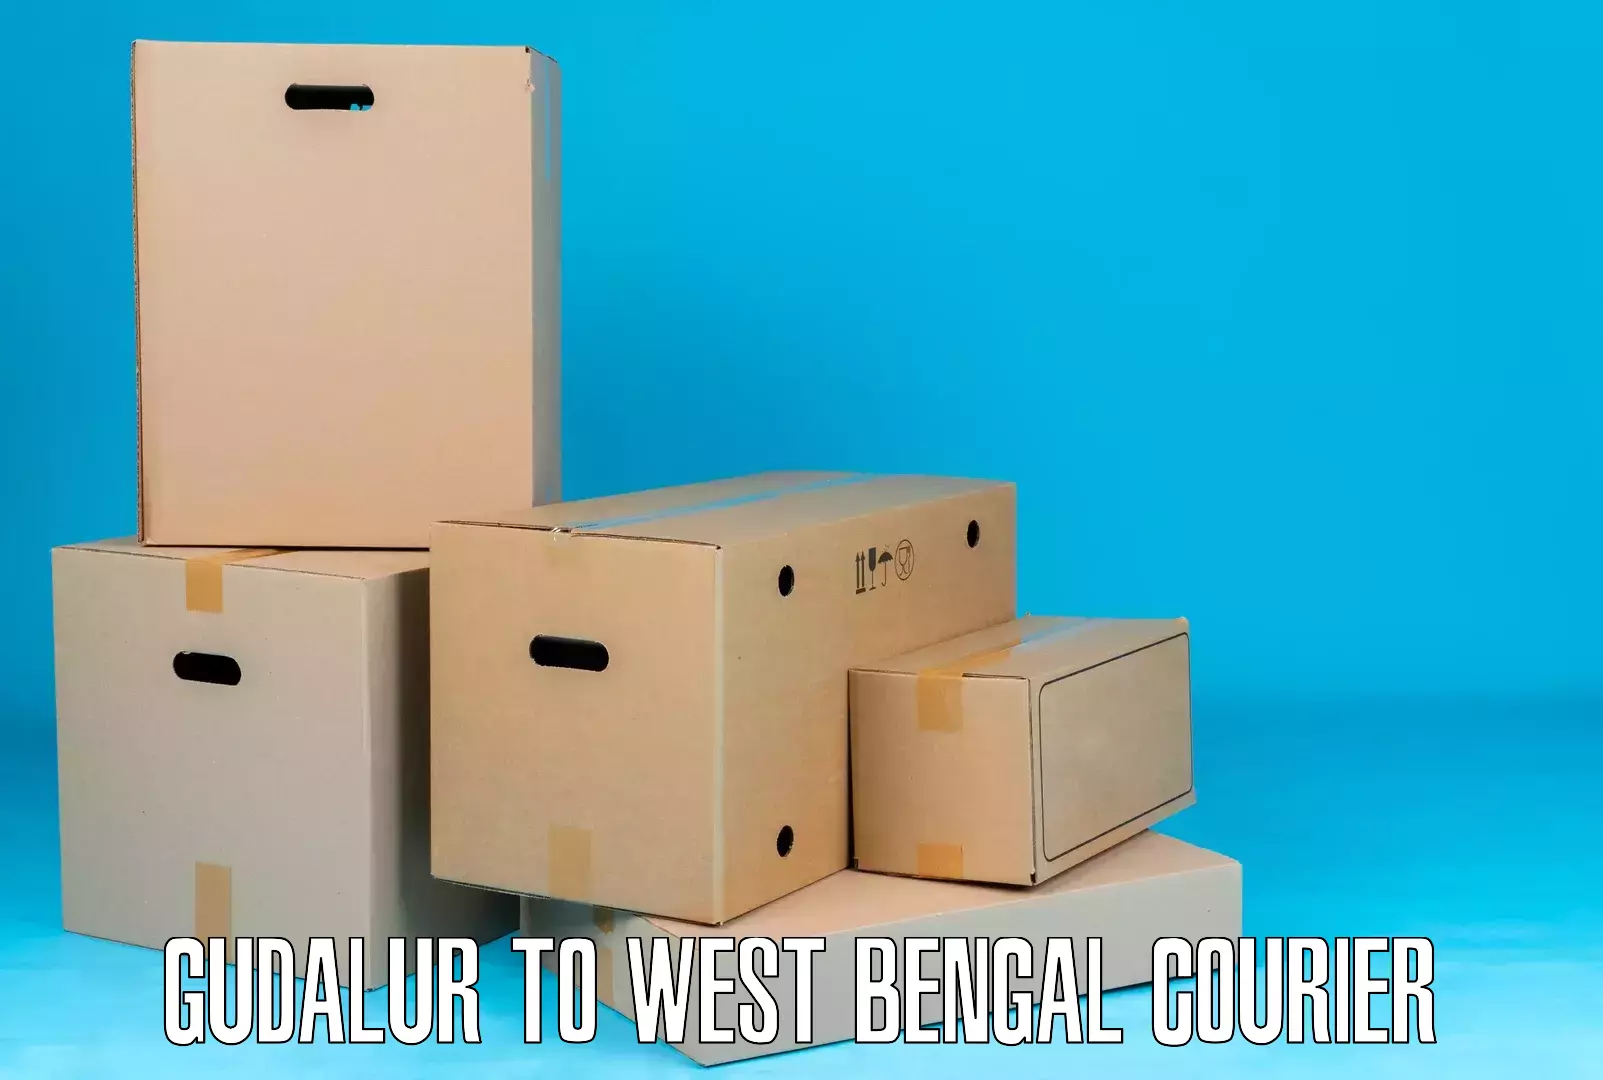 Digital courier platforms Gudalur to West Bengal